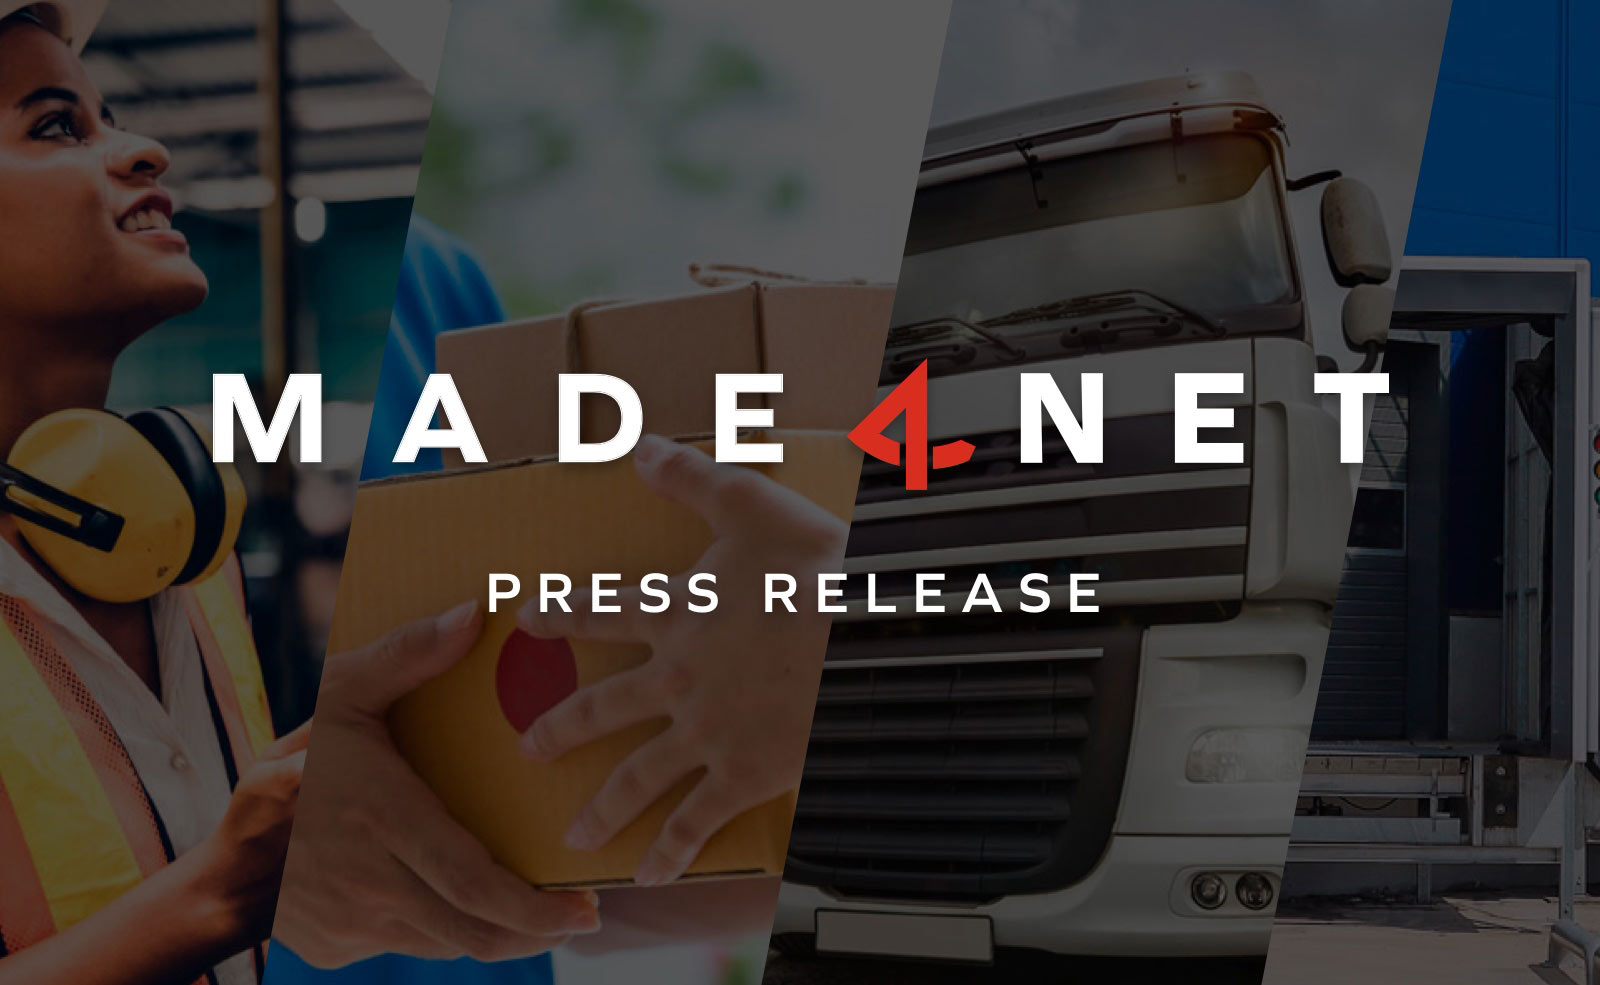 Made4net Press Release